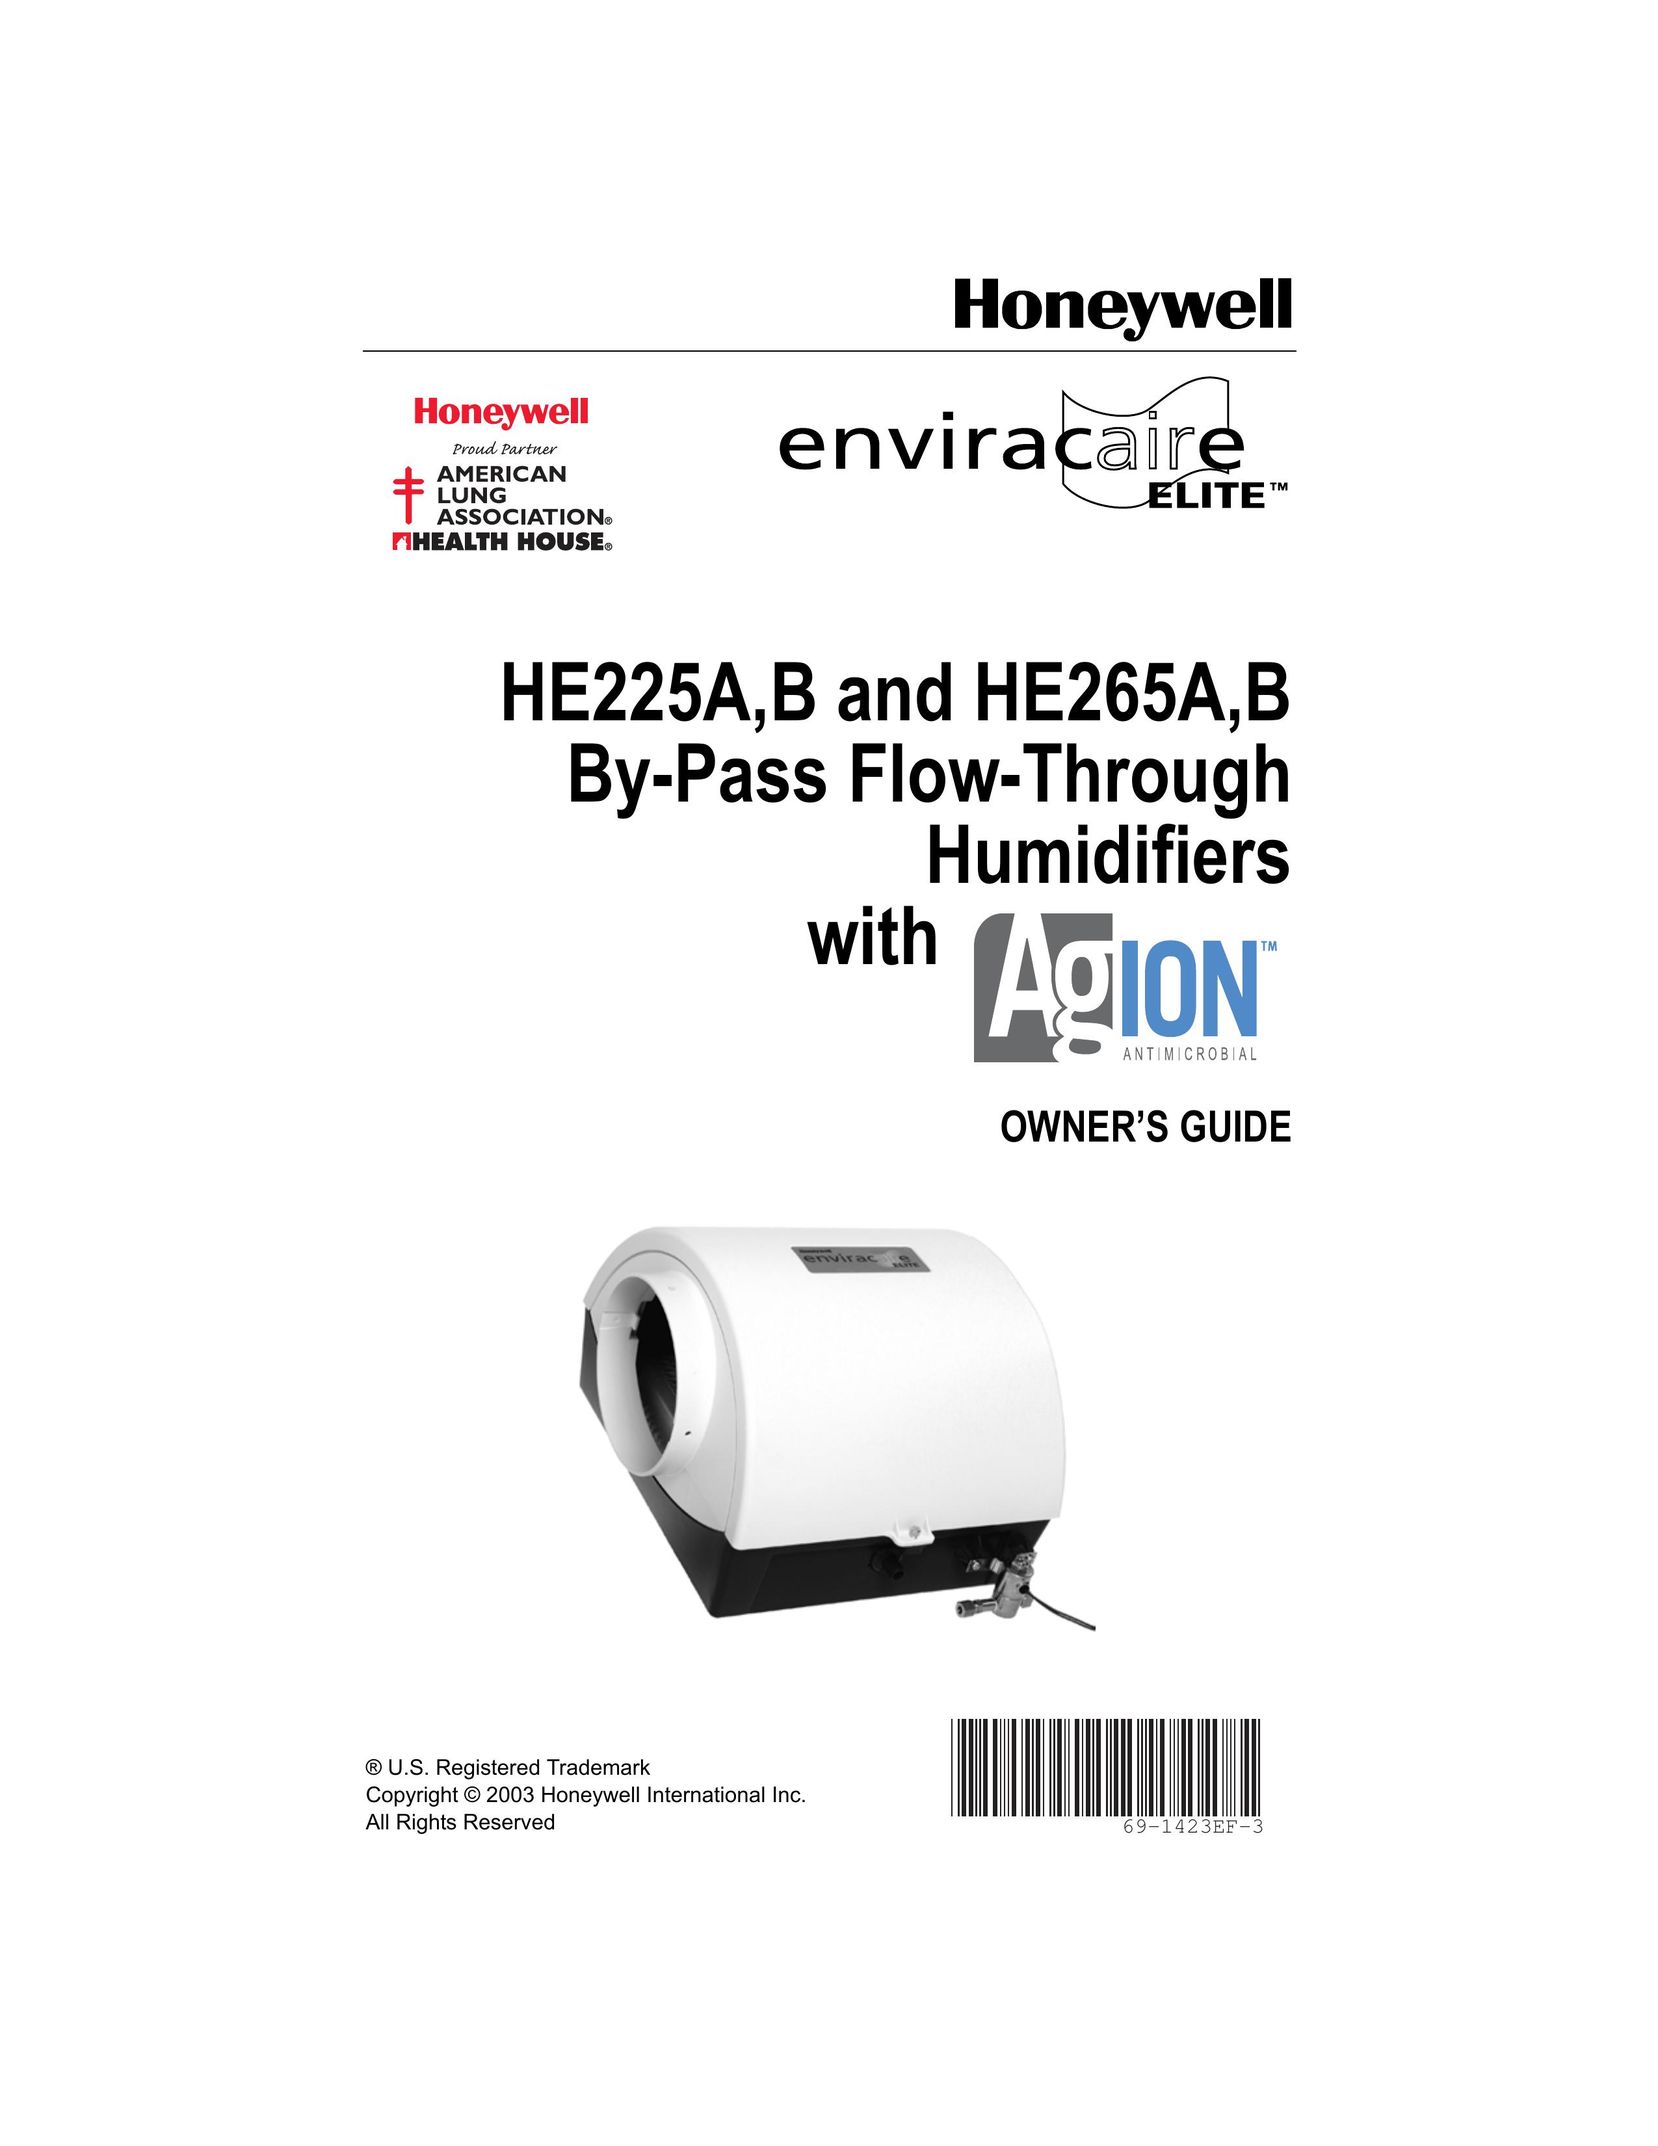 Honeywell HE265A Humidifier User Manual